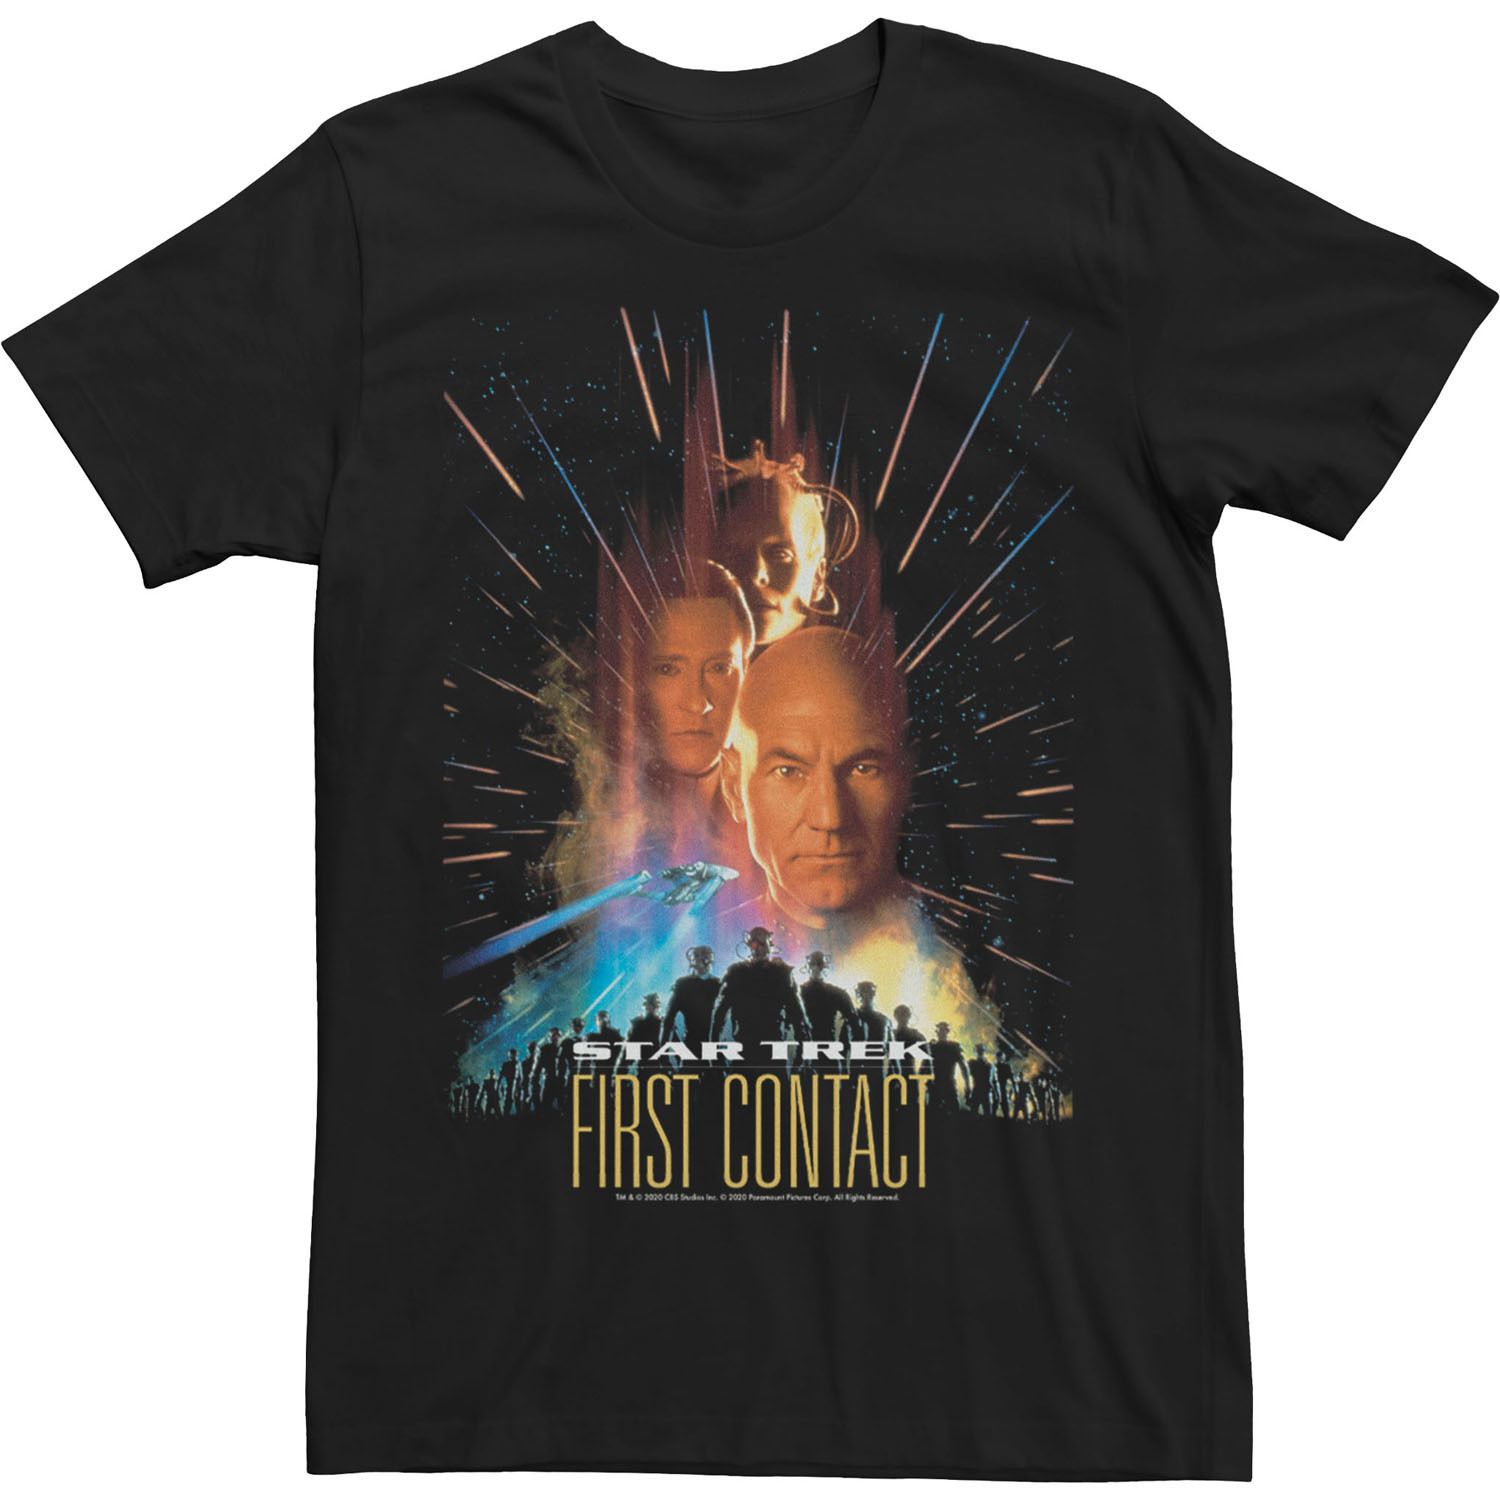 Мужская футболка с плакатом Star Trek First Contact Licensed Character